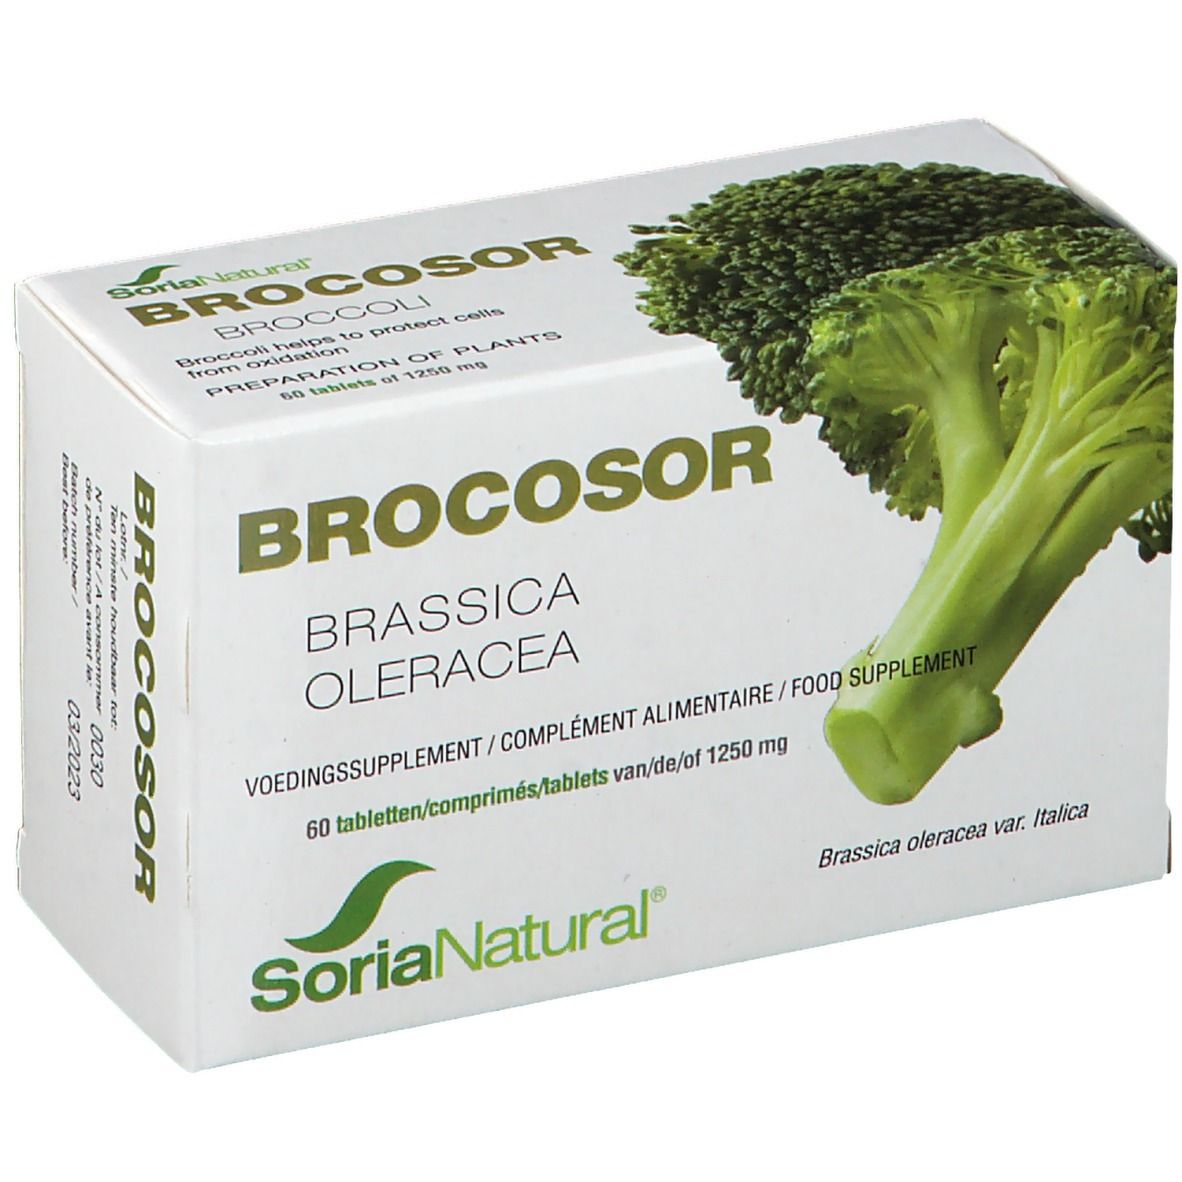 Soria Natural® Brocosor